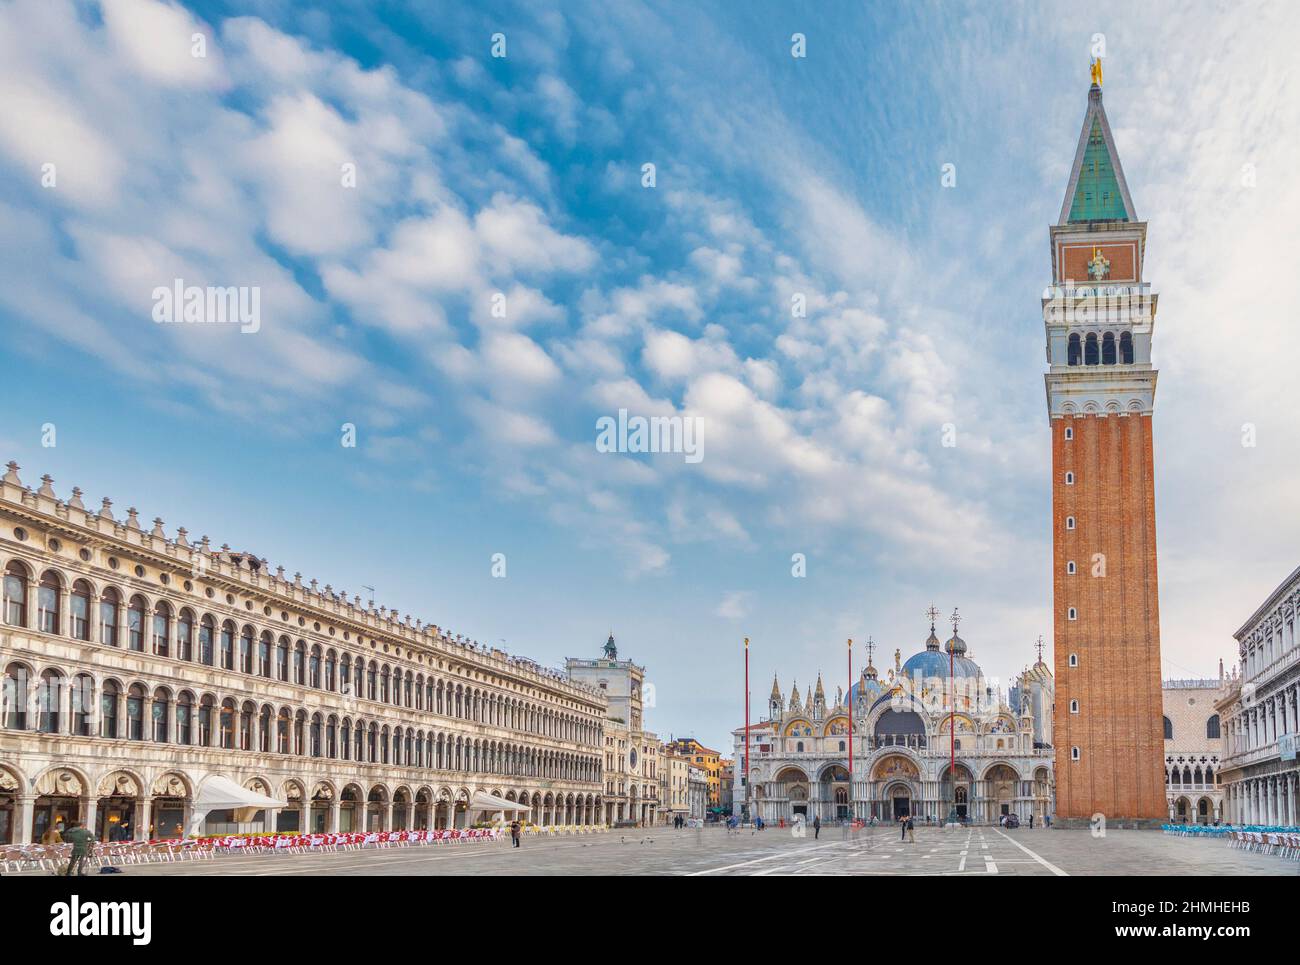 Italien, Venetien, Venedig, Markusplatz mit Markusdom und Glockentürmen Stockfoto